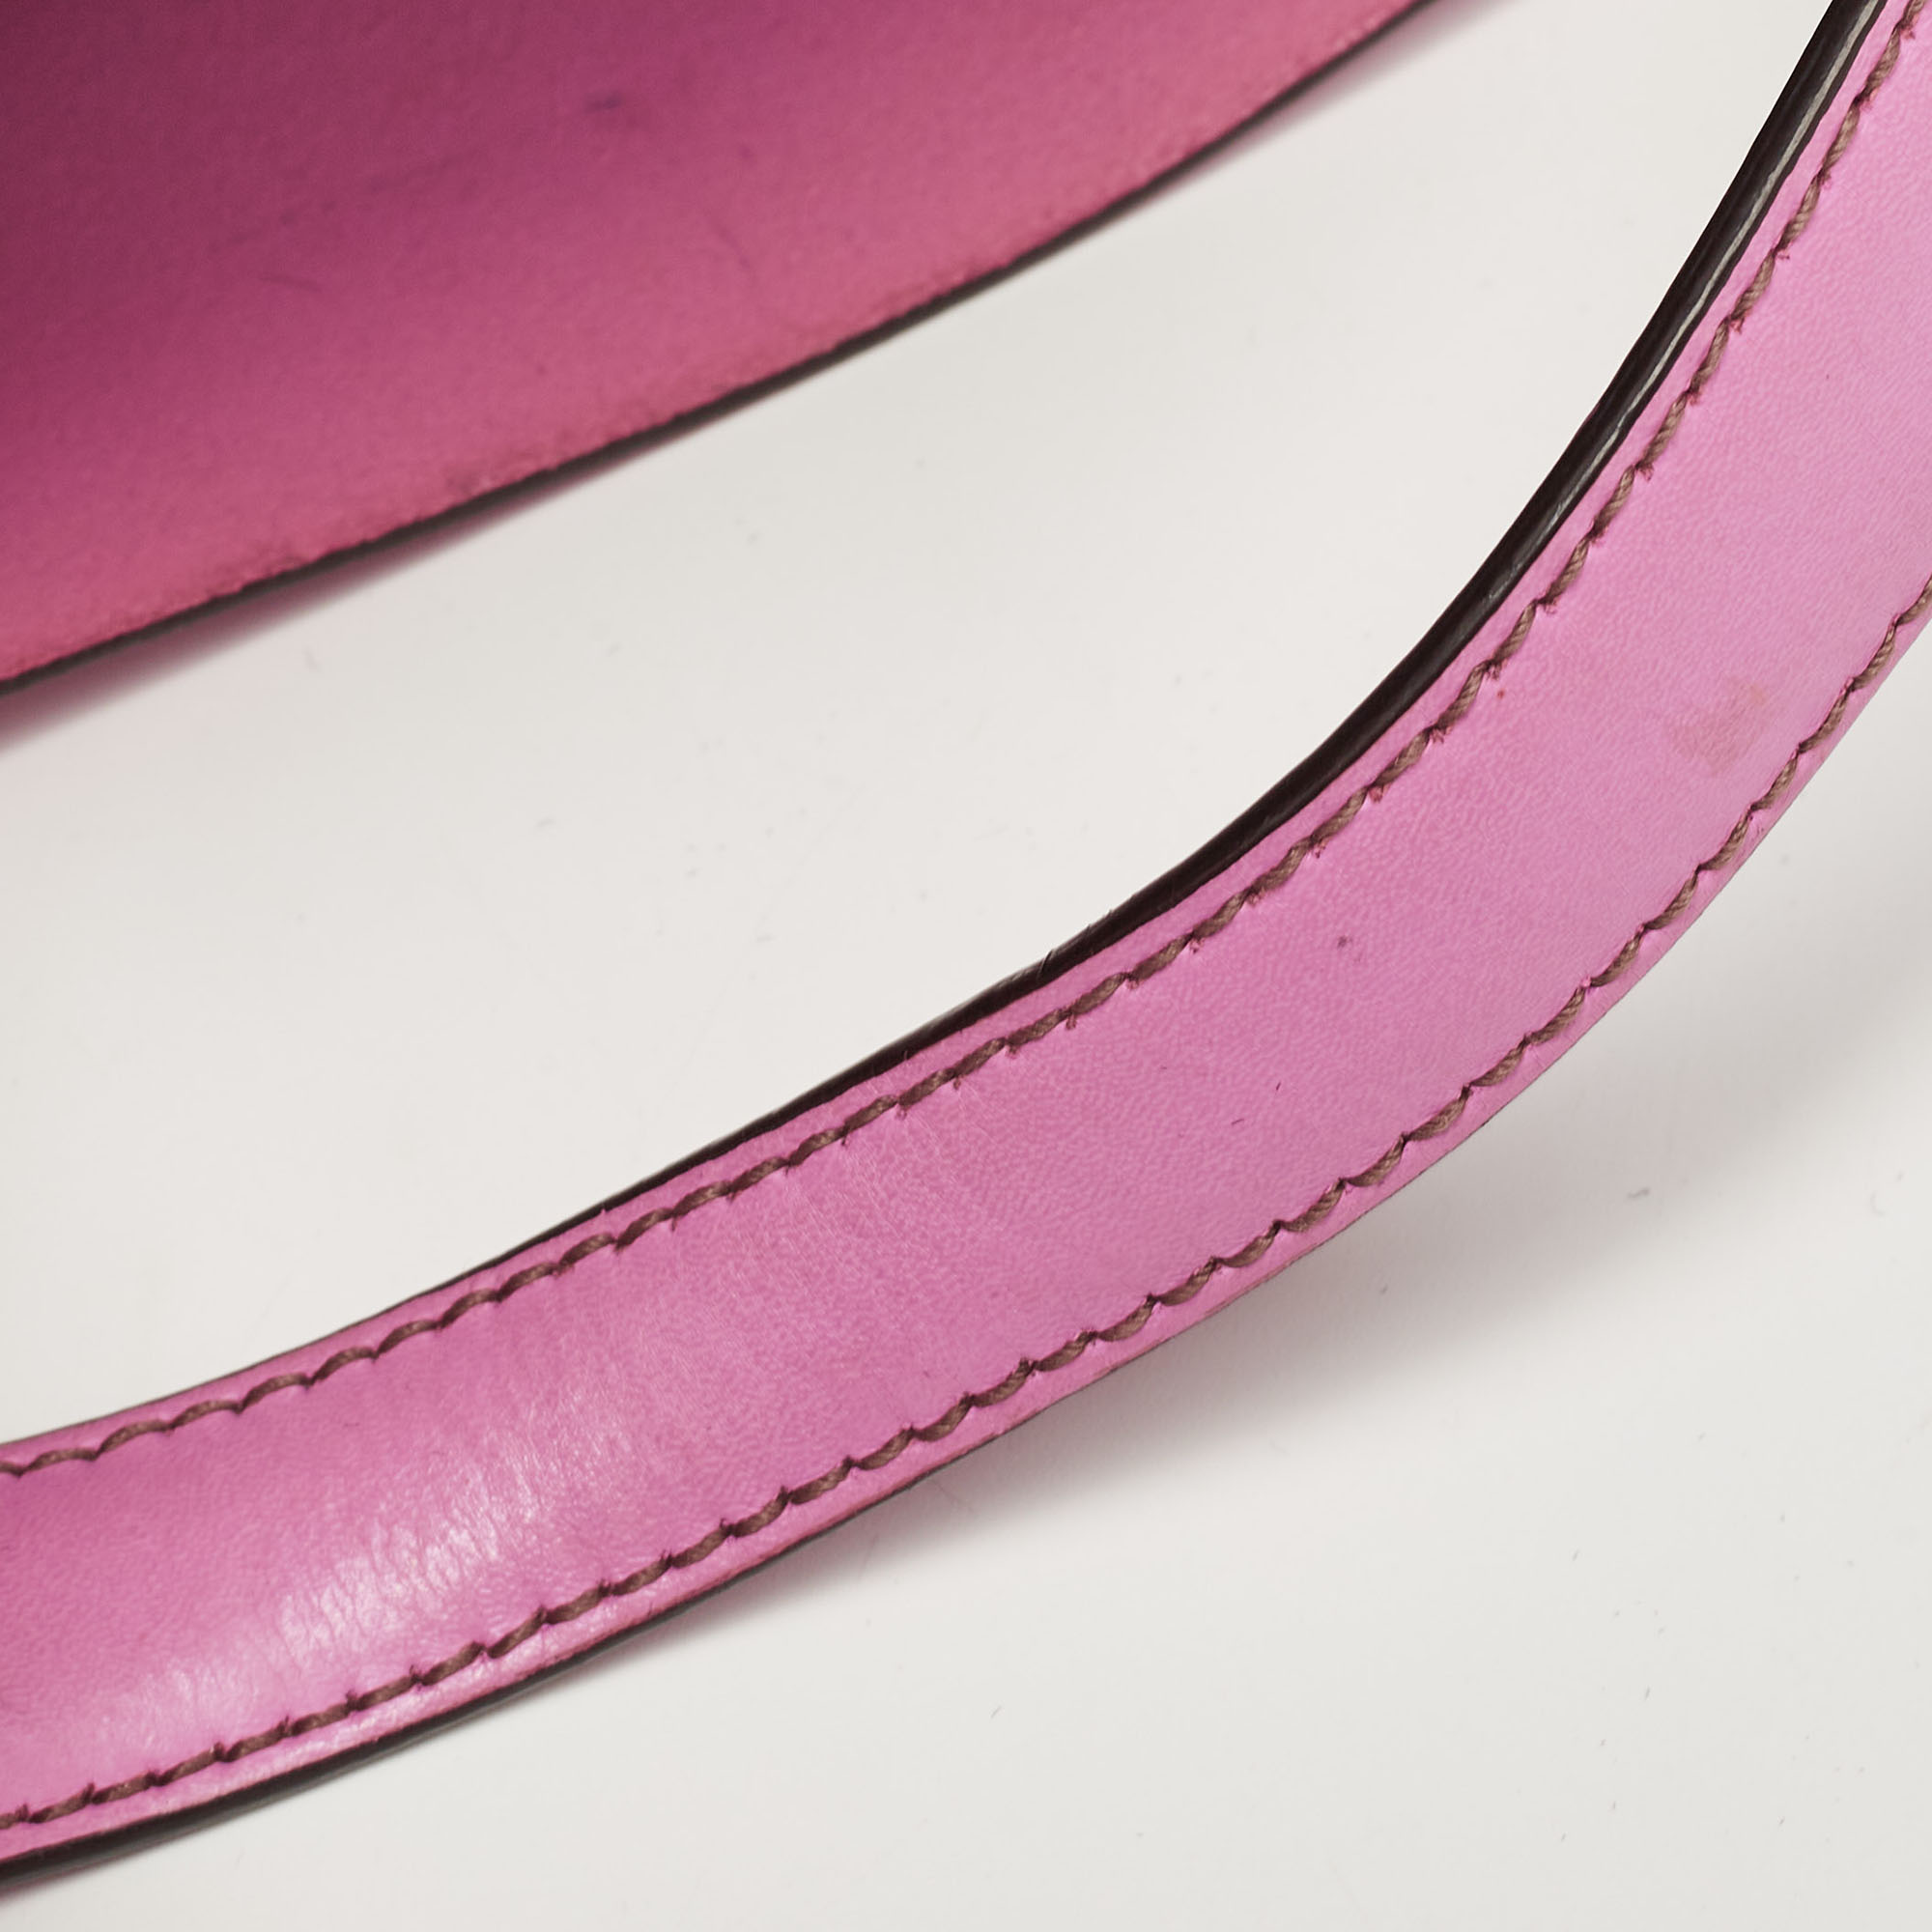 Furla Pink Leather Stacy Drawstring Bucket Bag